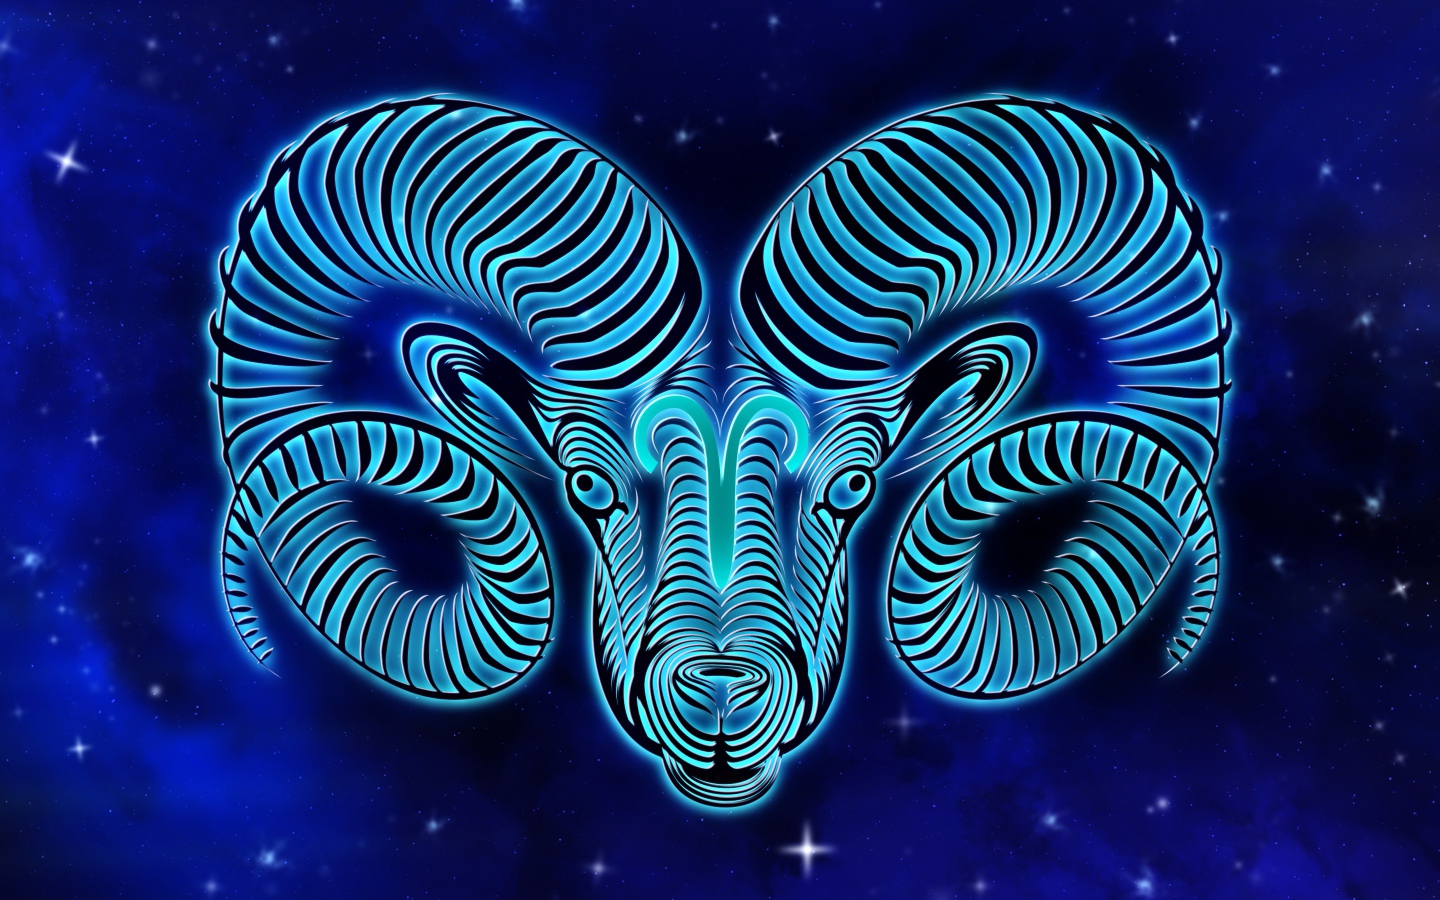 Beautiful zodiac sign Aries on blue background